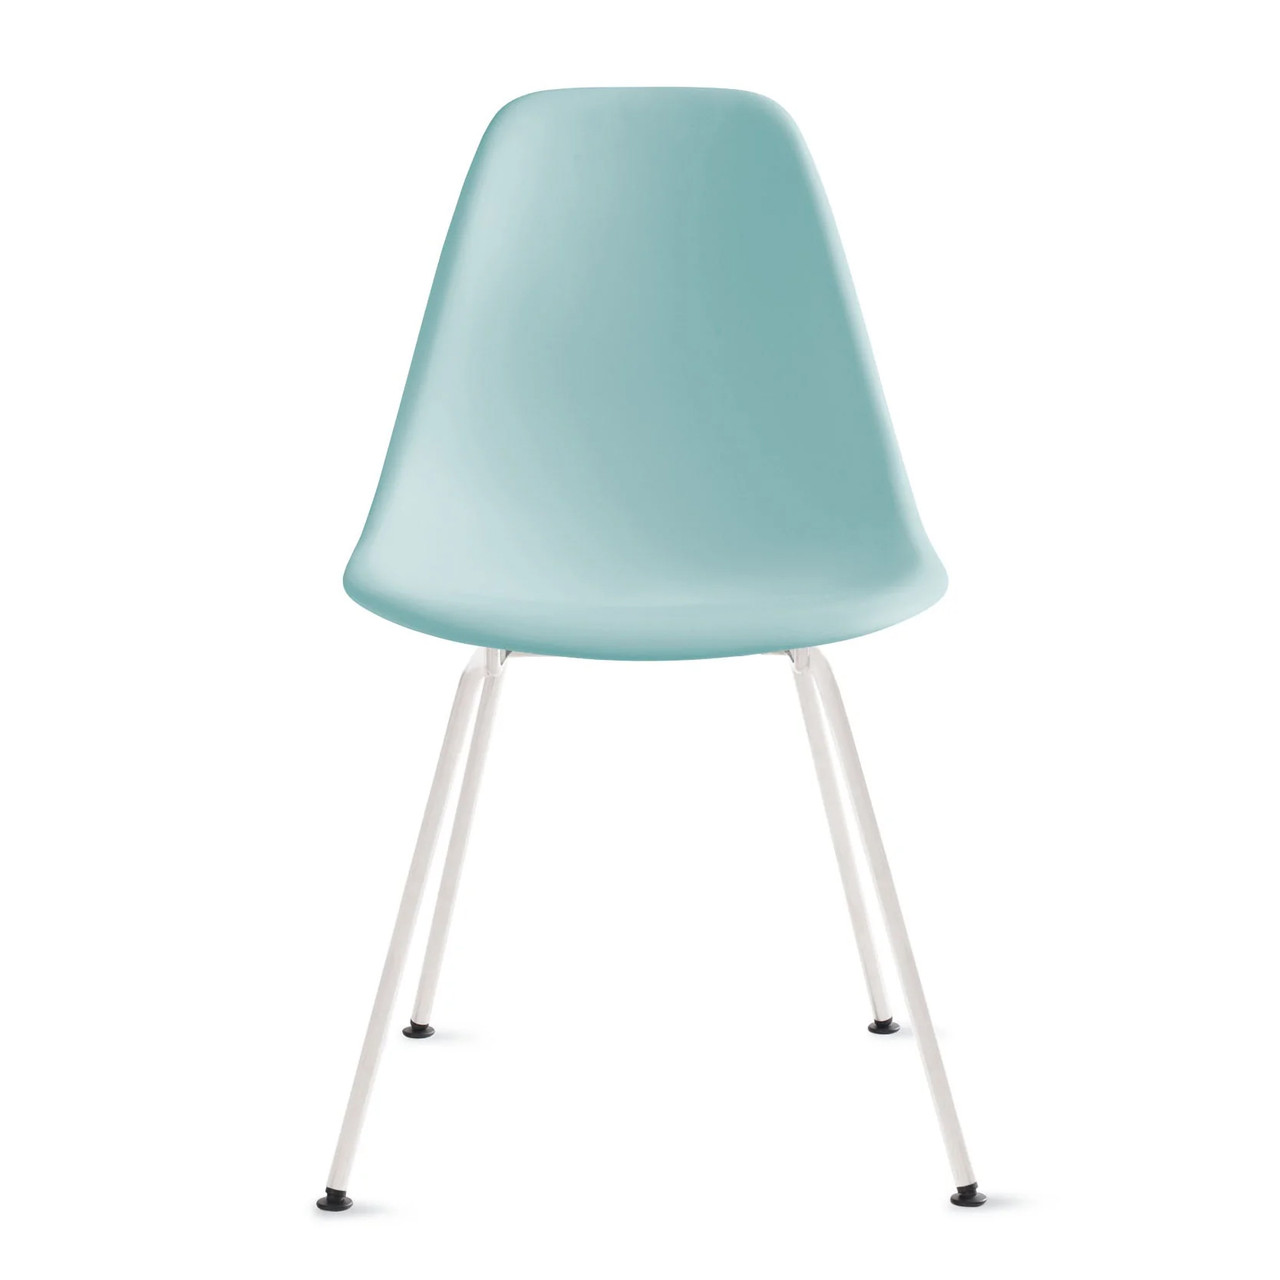 https://cdn11.bigcommerce.com/s-8lvhv7xqa7/images/stencil/1280x1280/products/3028/1941/herman-miller-eames-molded-plastic-side-chair-4-leg-base-base-finish-white__57940.1664062325.jpg?c=1